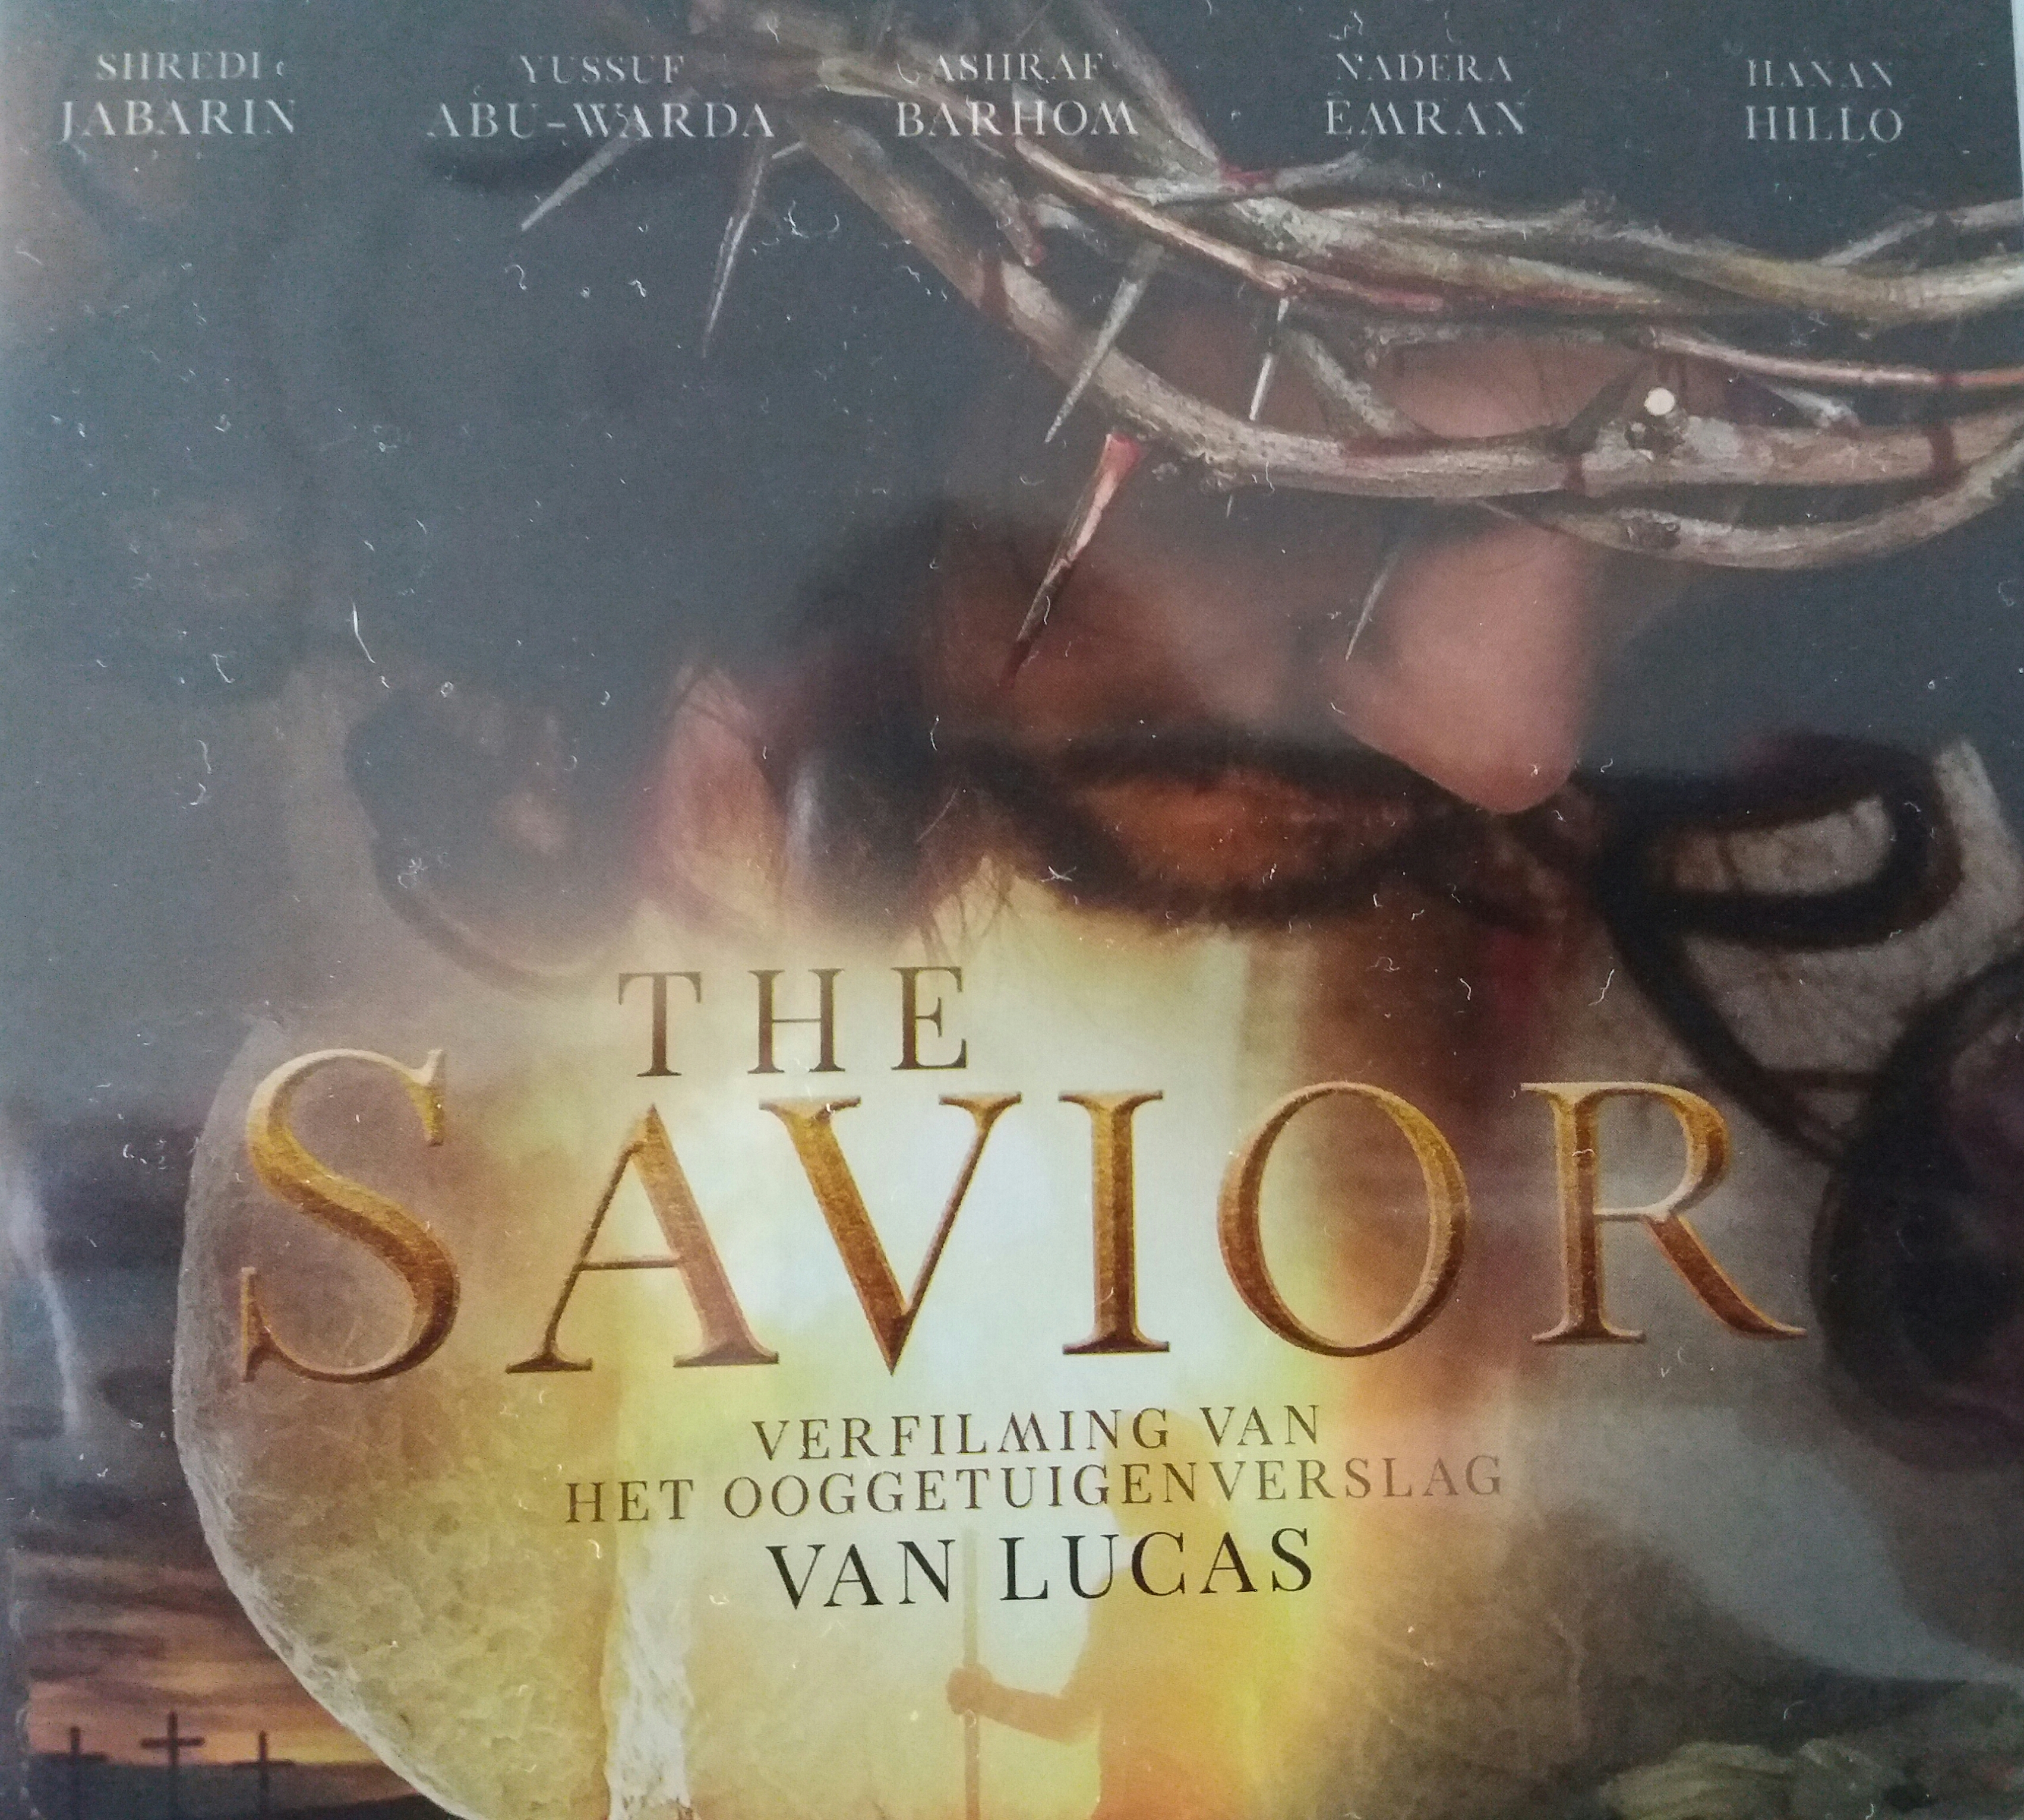 The Savior (2014) Screenshot 3